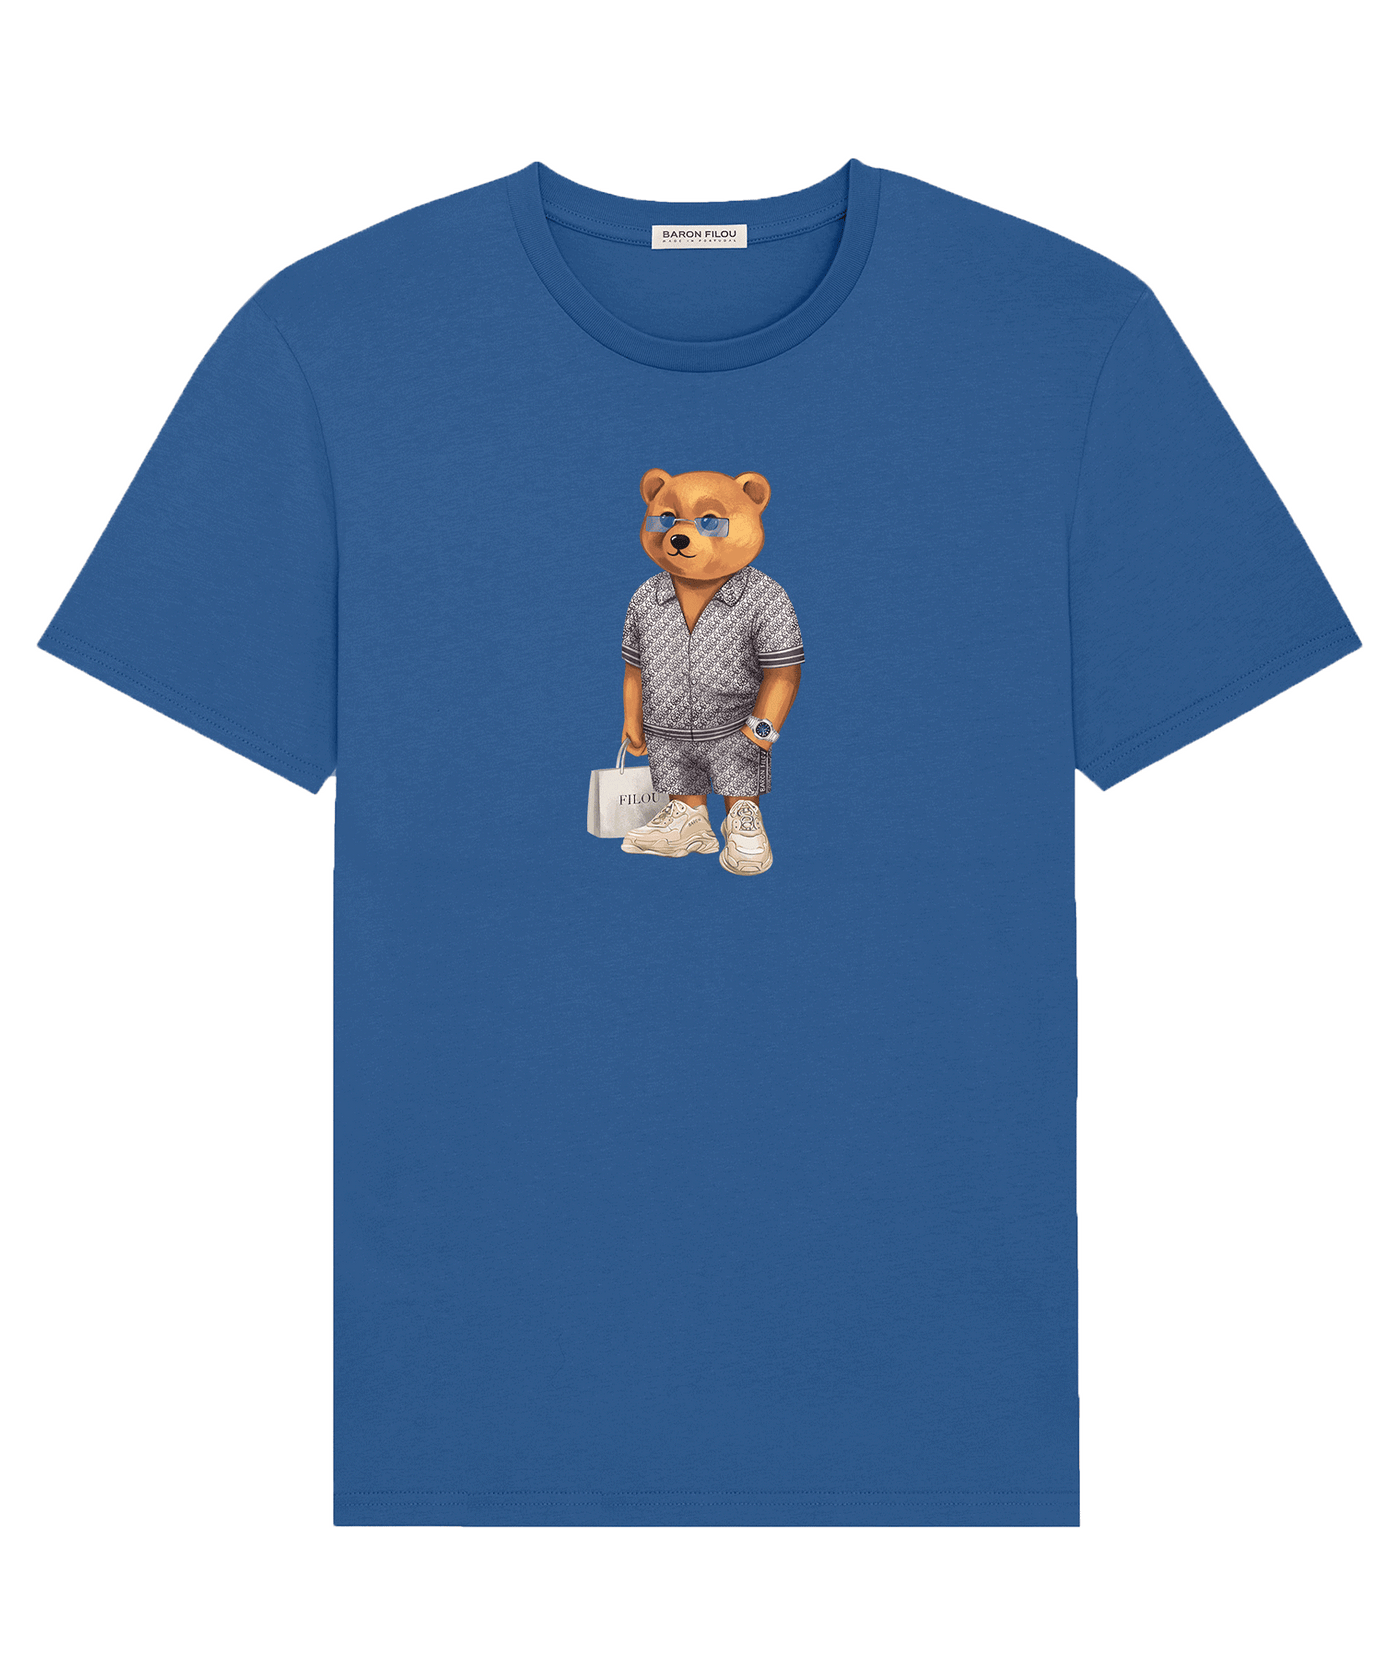 Baron Filou - Filou Lxxviii - Organic T-shirt - Blue Lagoon